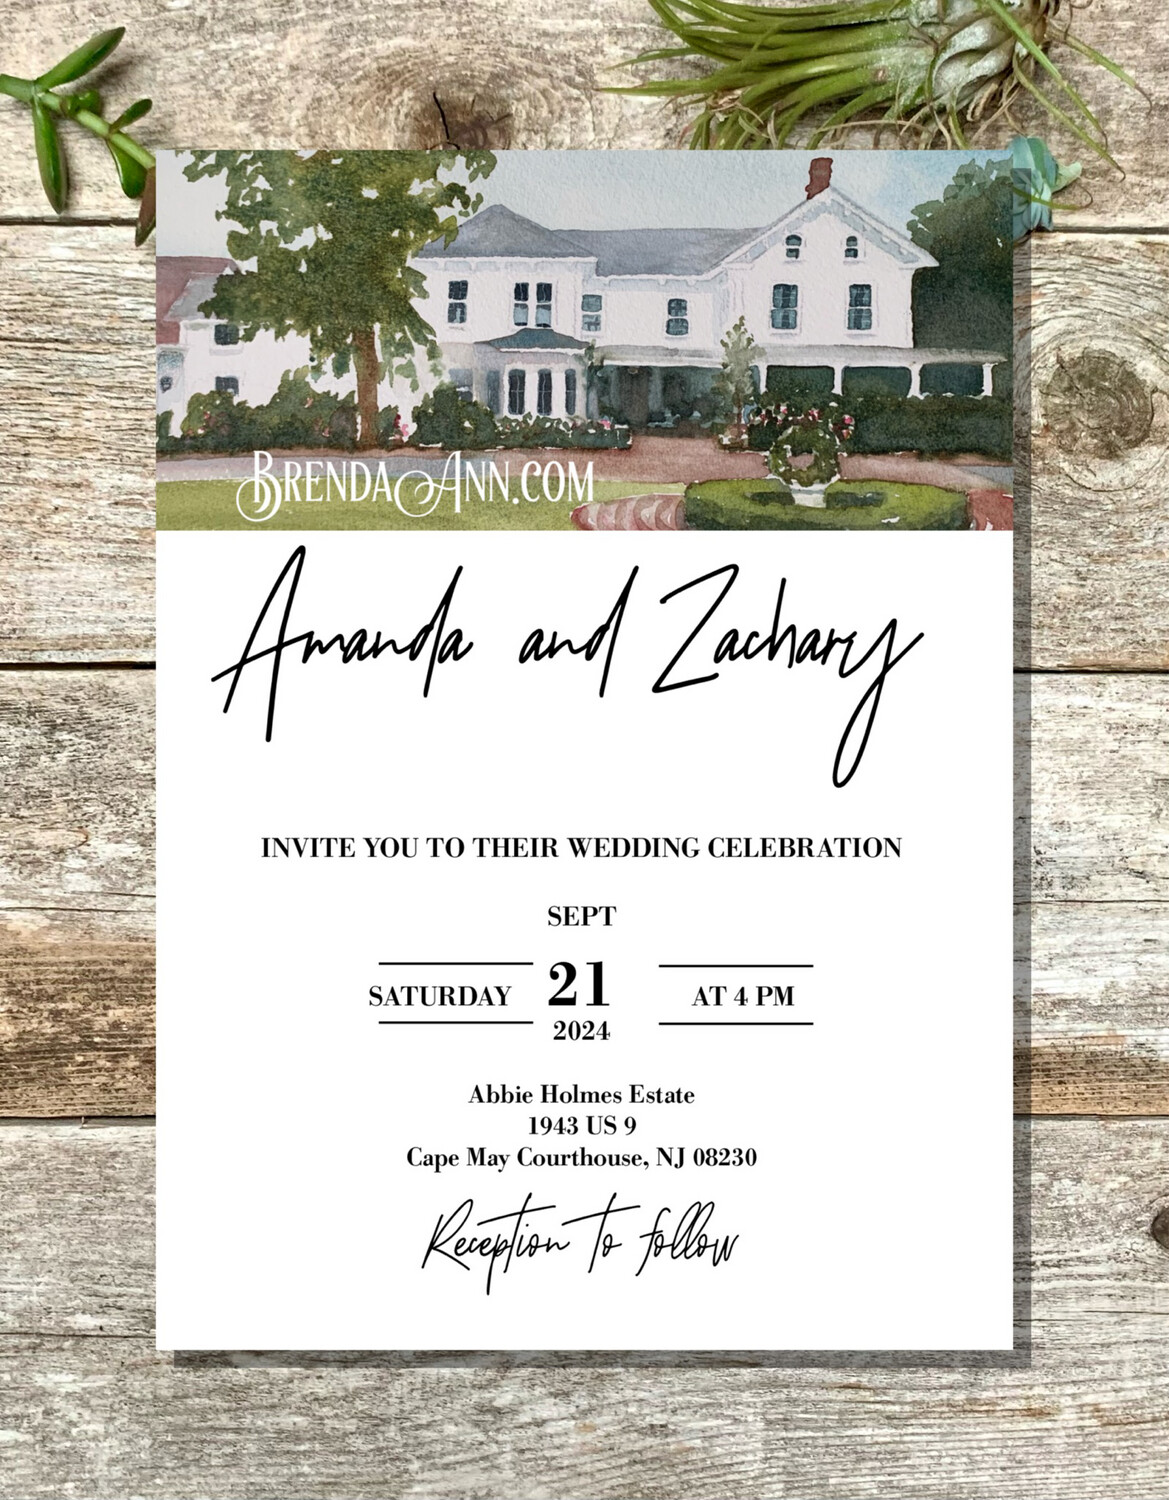 Abbie Holmes Estate Wedding Invitations 